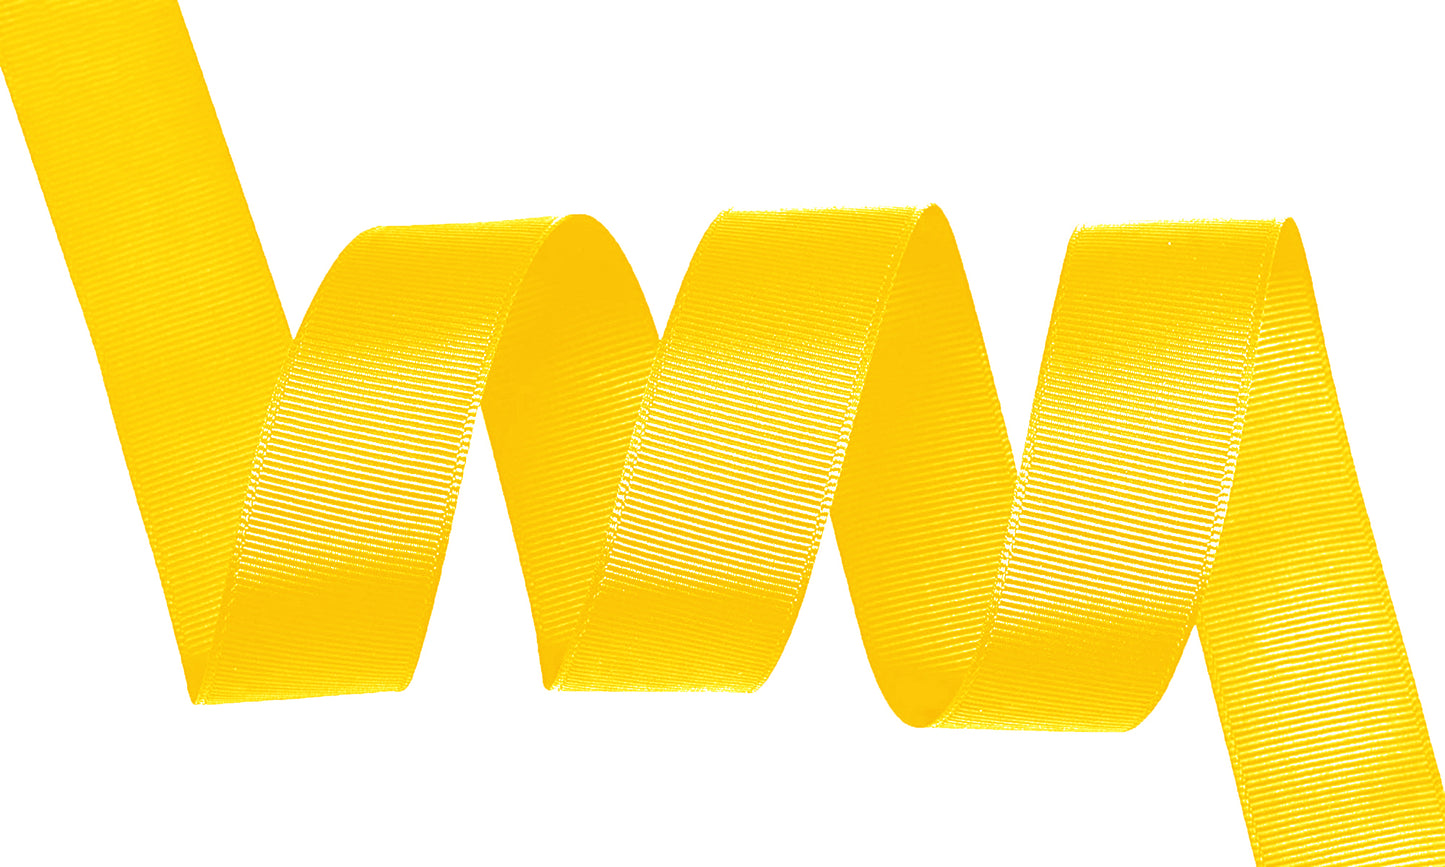 5 Yards Solid Sun Yellow Grosgrain Ribbon Yardage DIY Crafts Bows USA